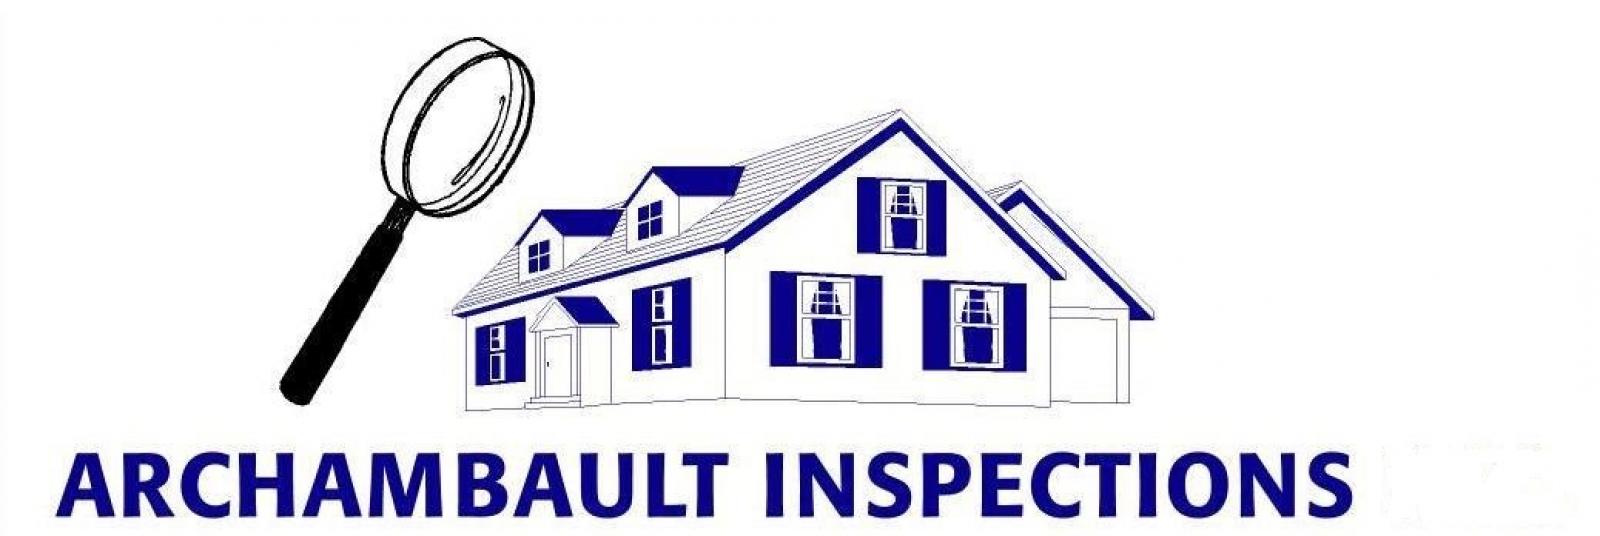 Archambault Inspections Logo